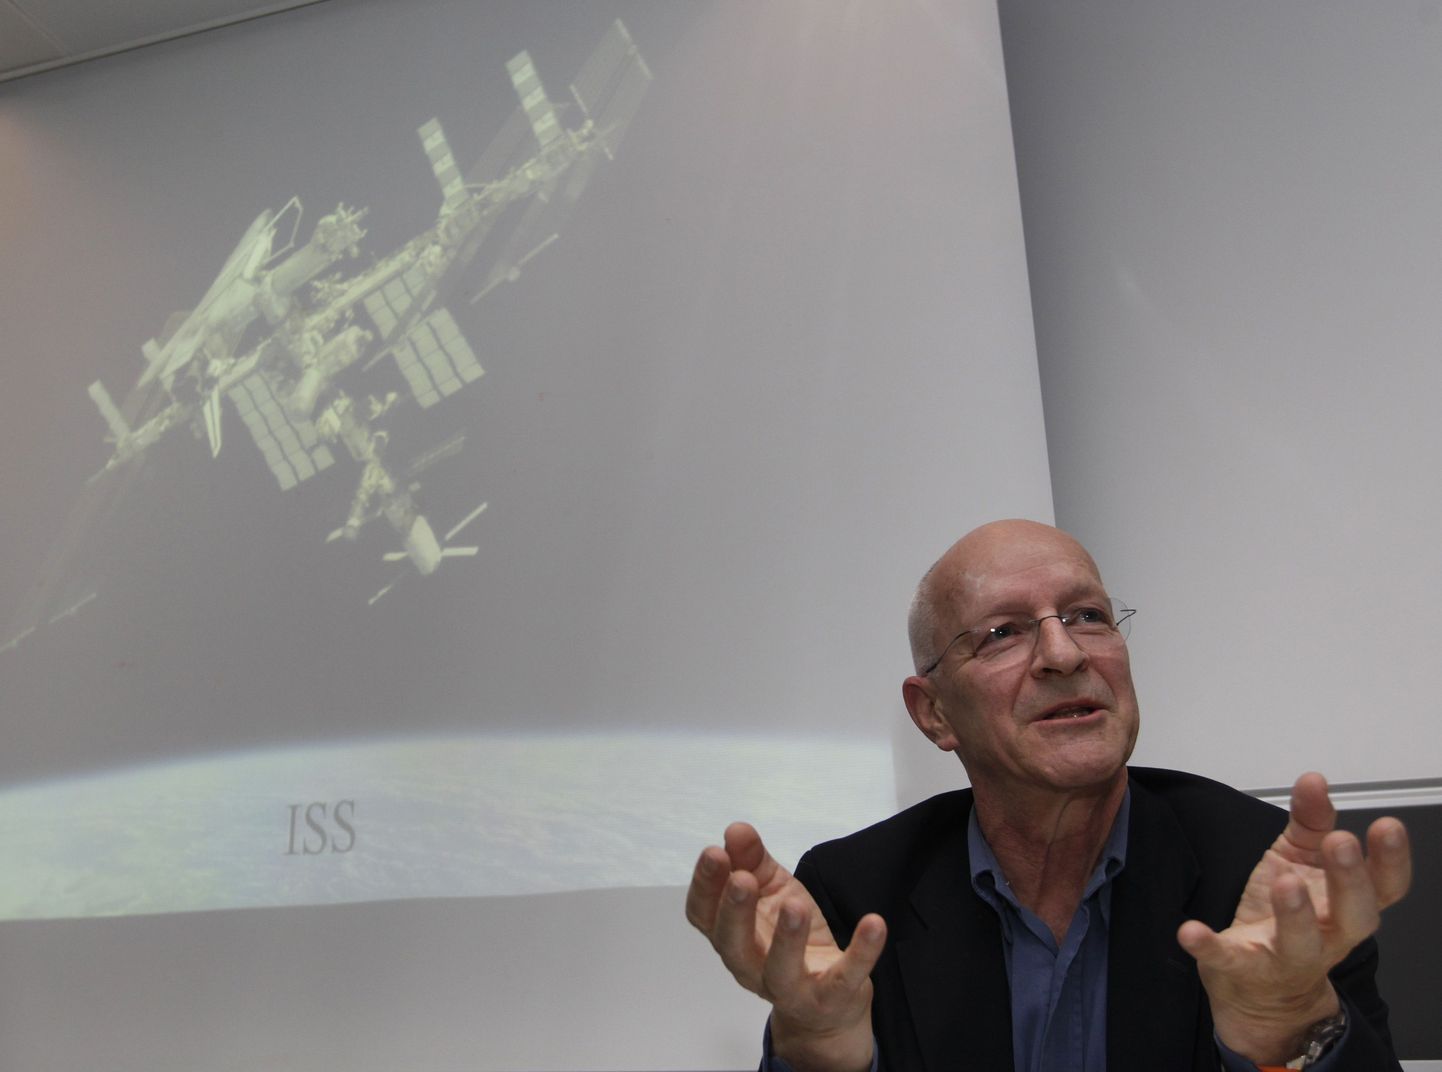 Šveitsi kosmosekeskuse teadlane Claude Nicollier jagamas infot projekti CleanSpace One kohta